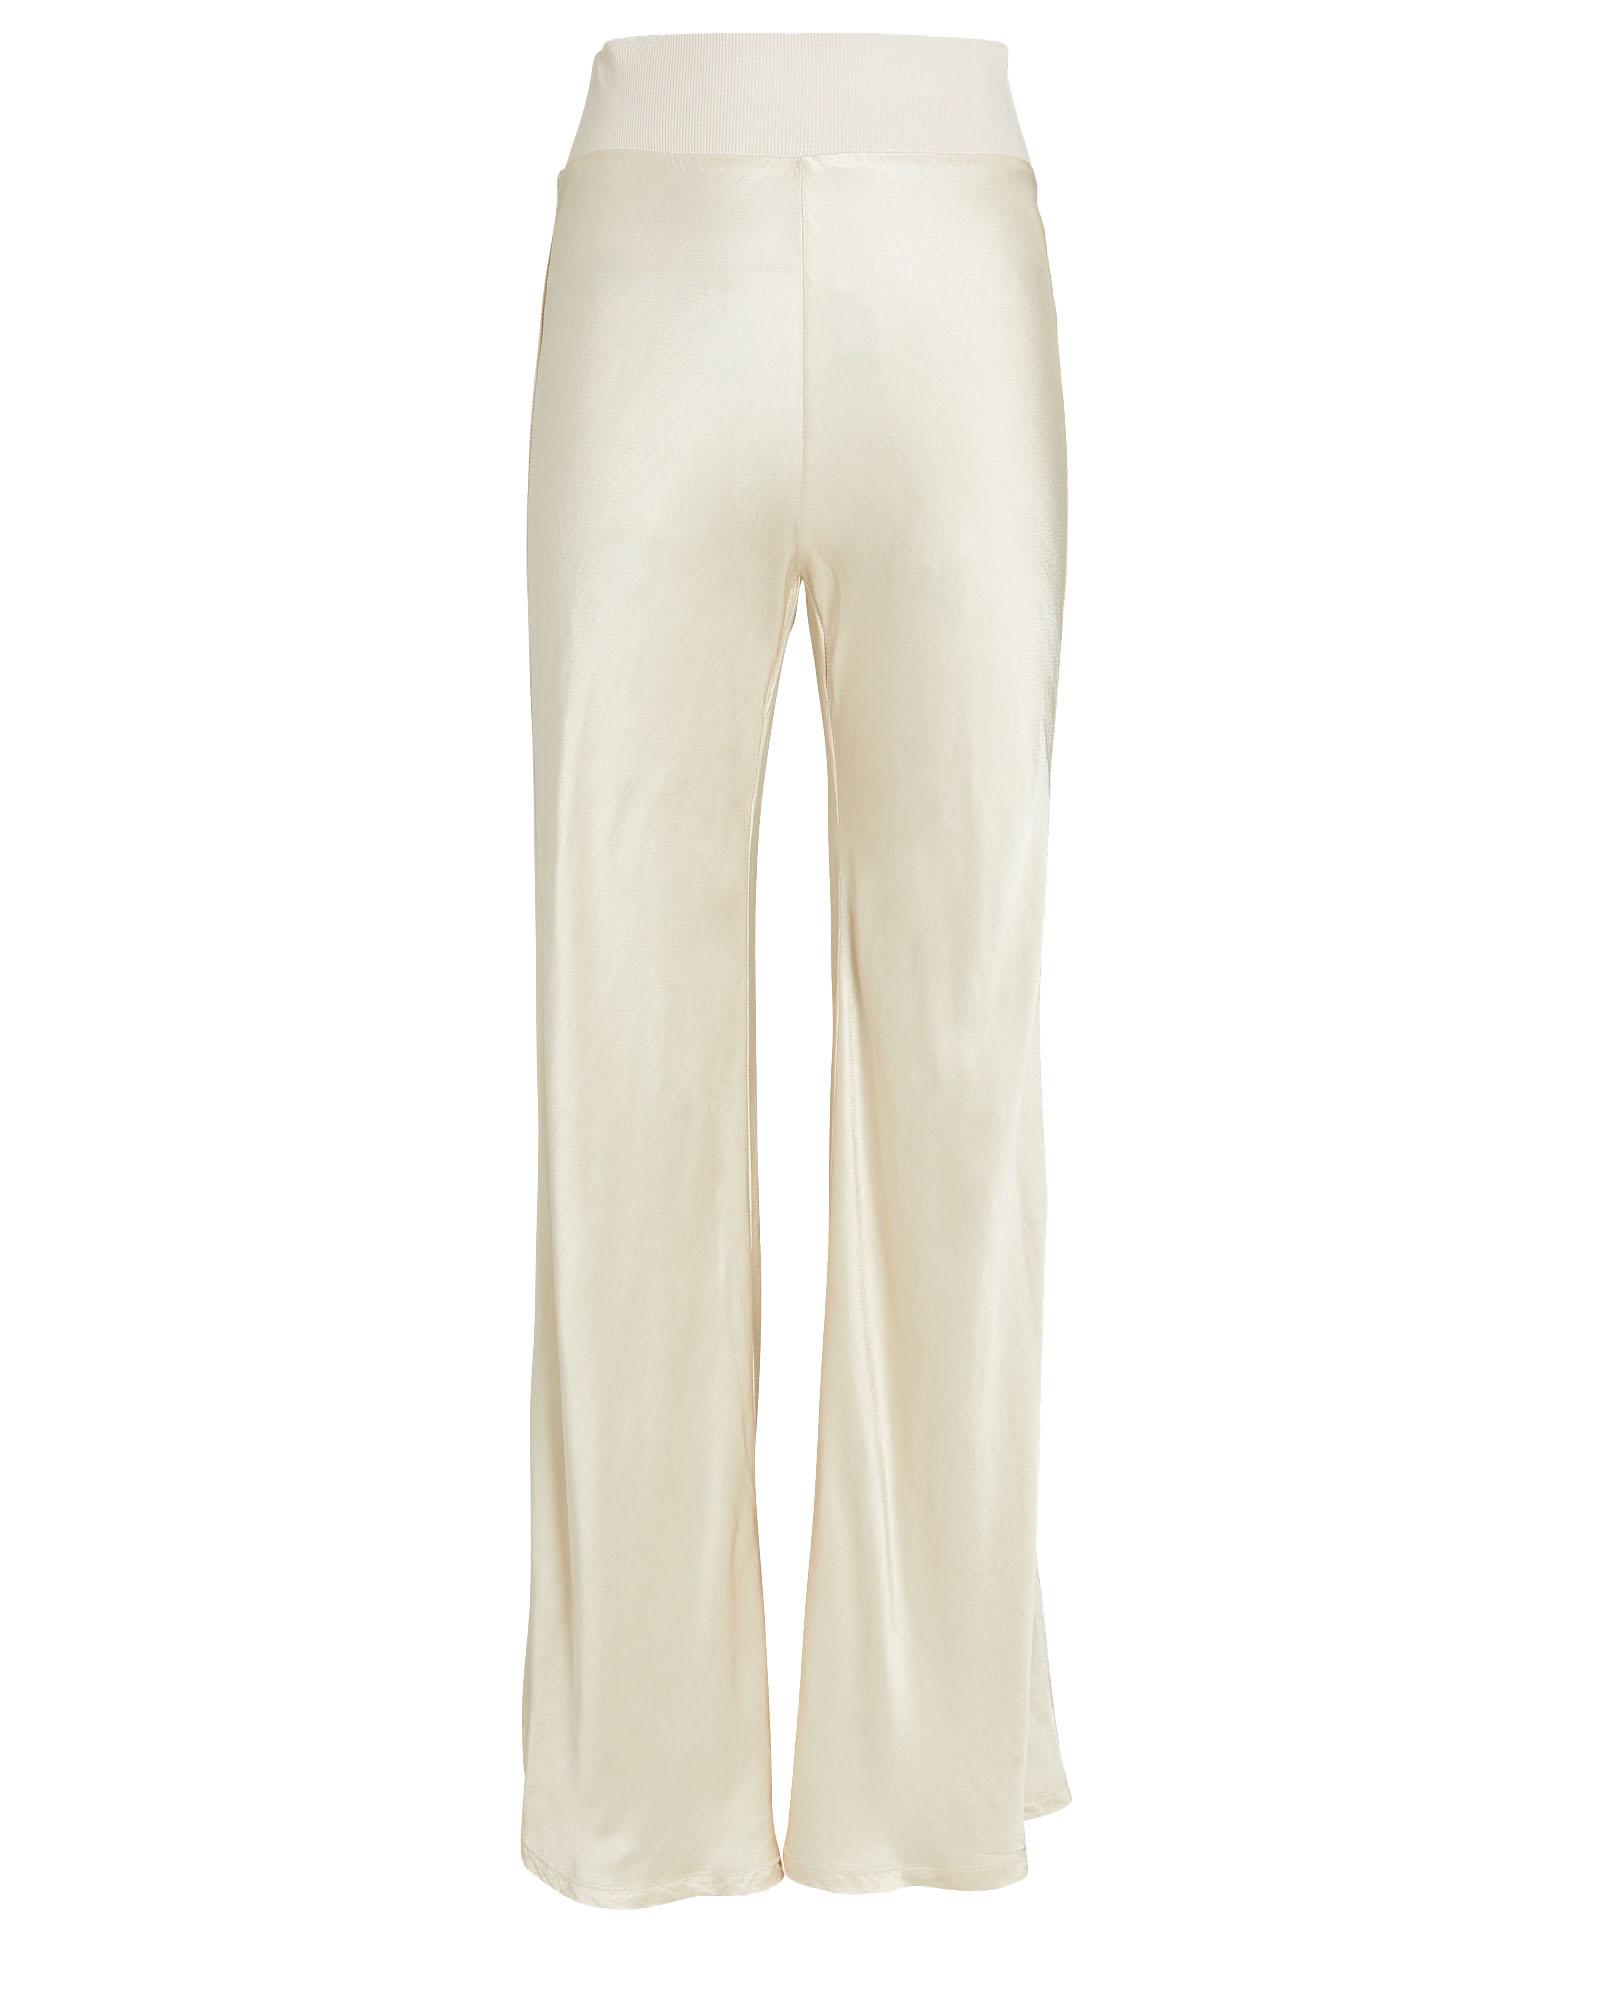 Premium White Satin Low Rise Drawstring Pants | PrettyLittleThing AUS